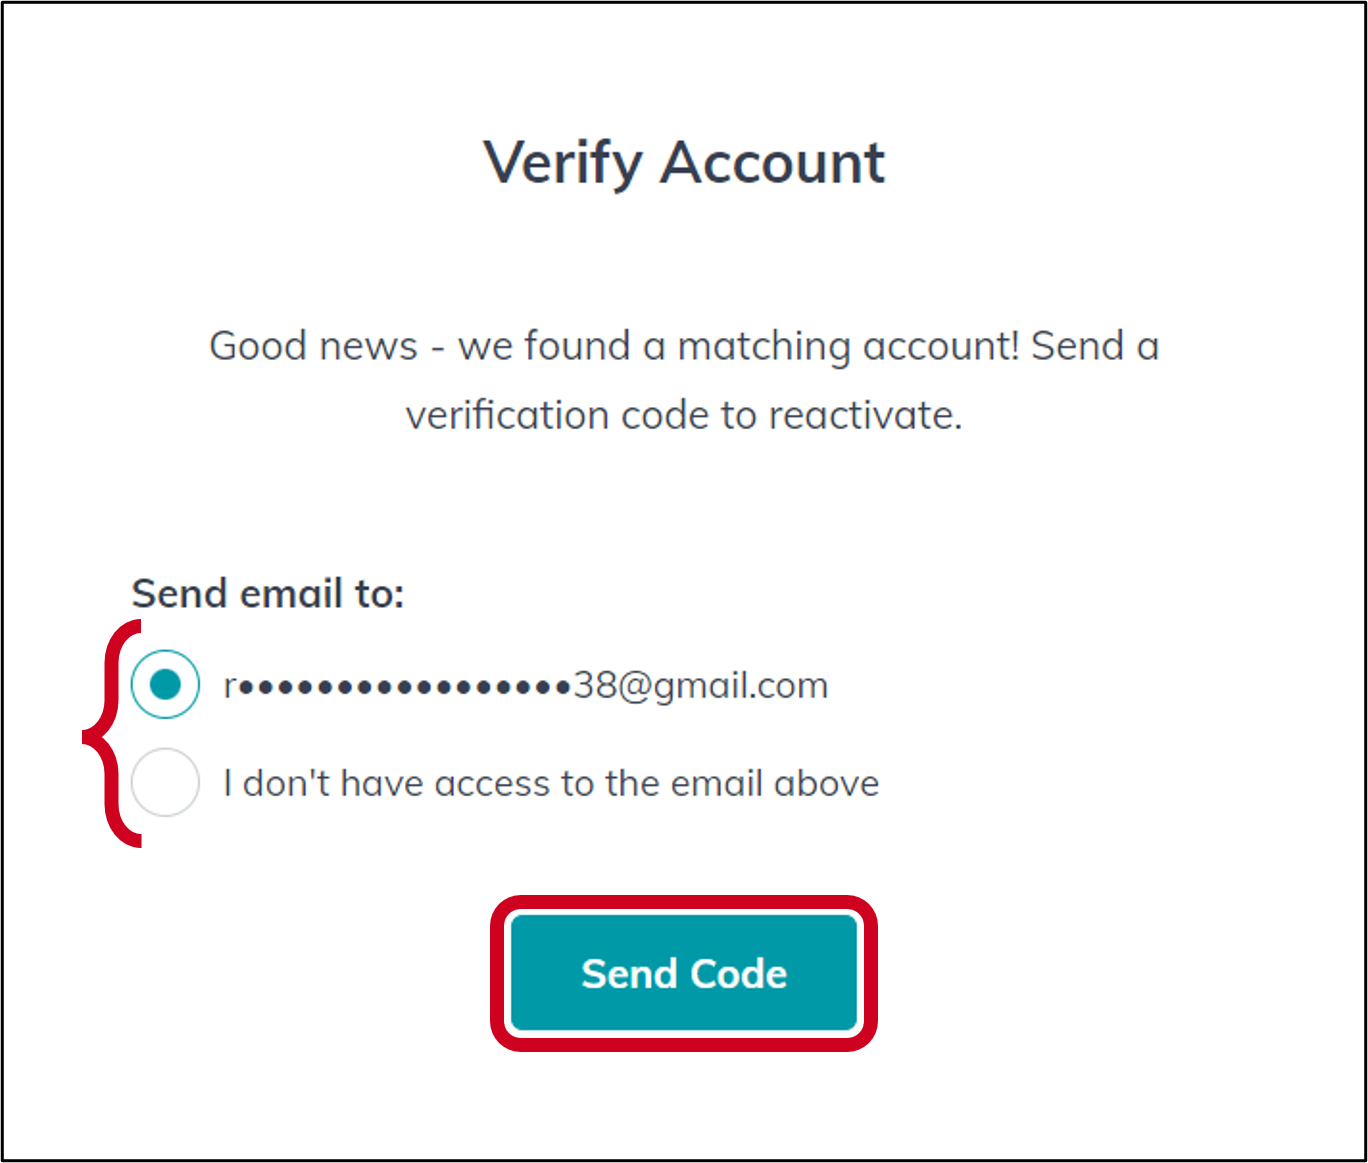 assoc_rjp_verify_account_1.png